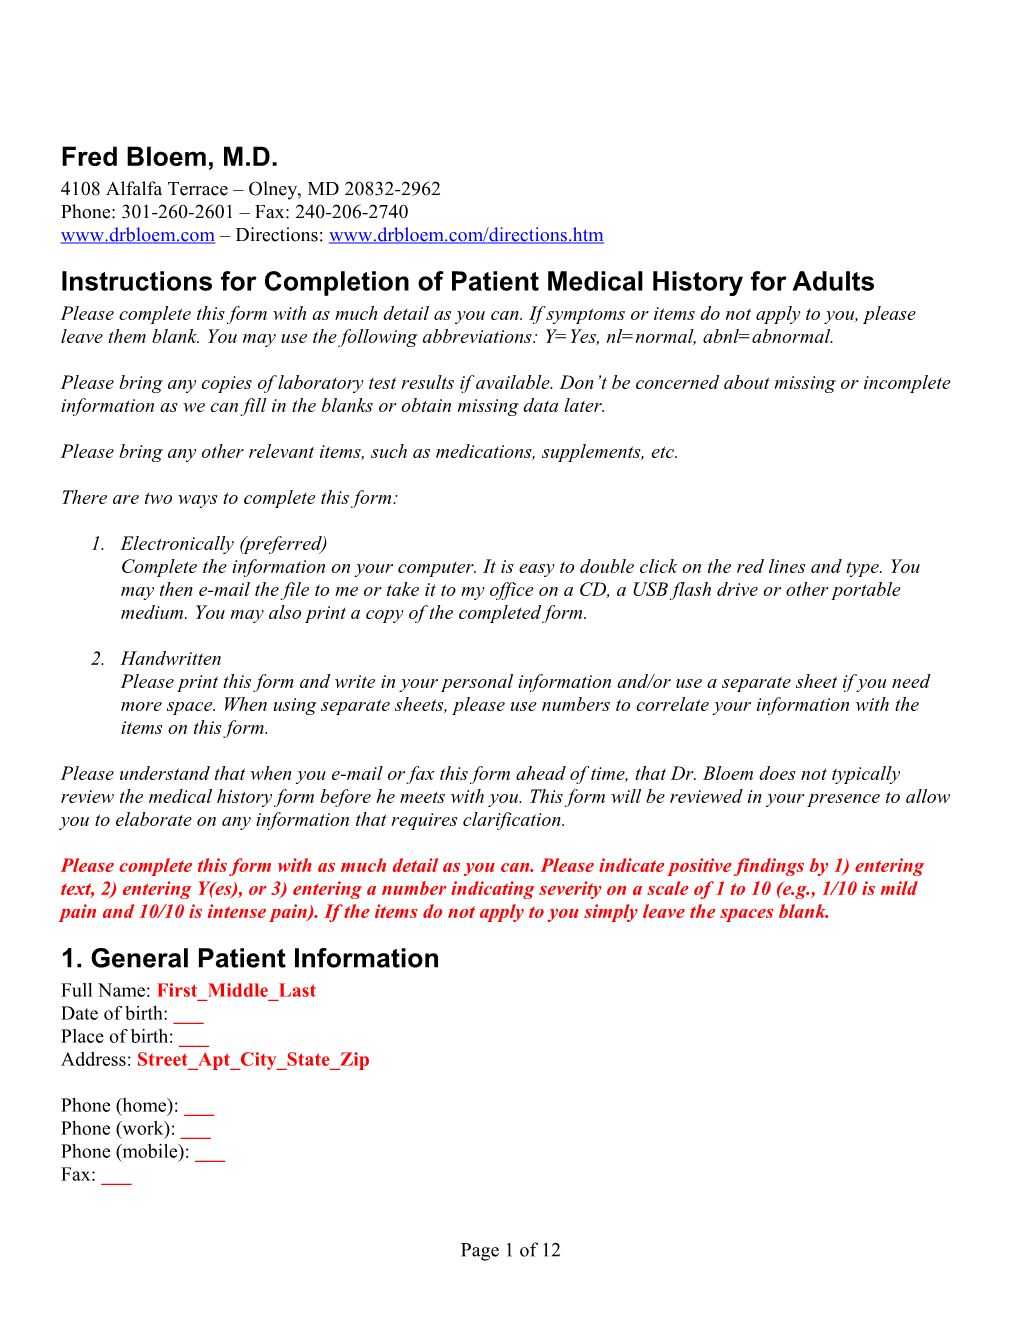 General Patient Information